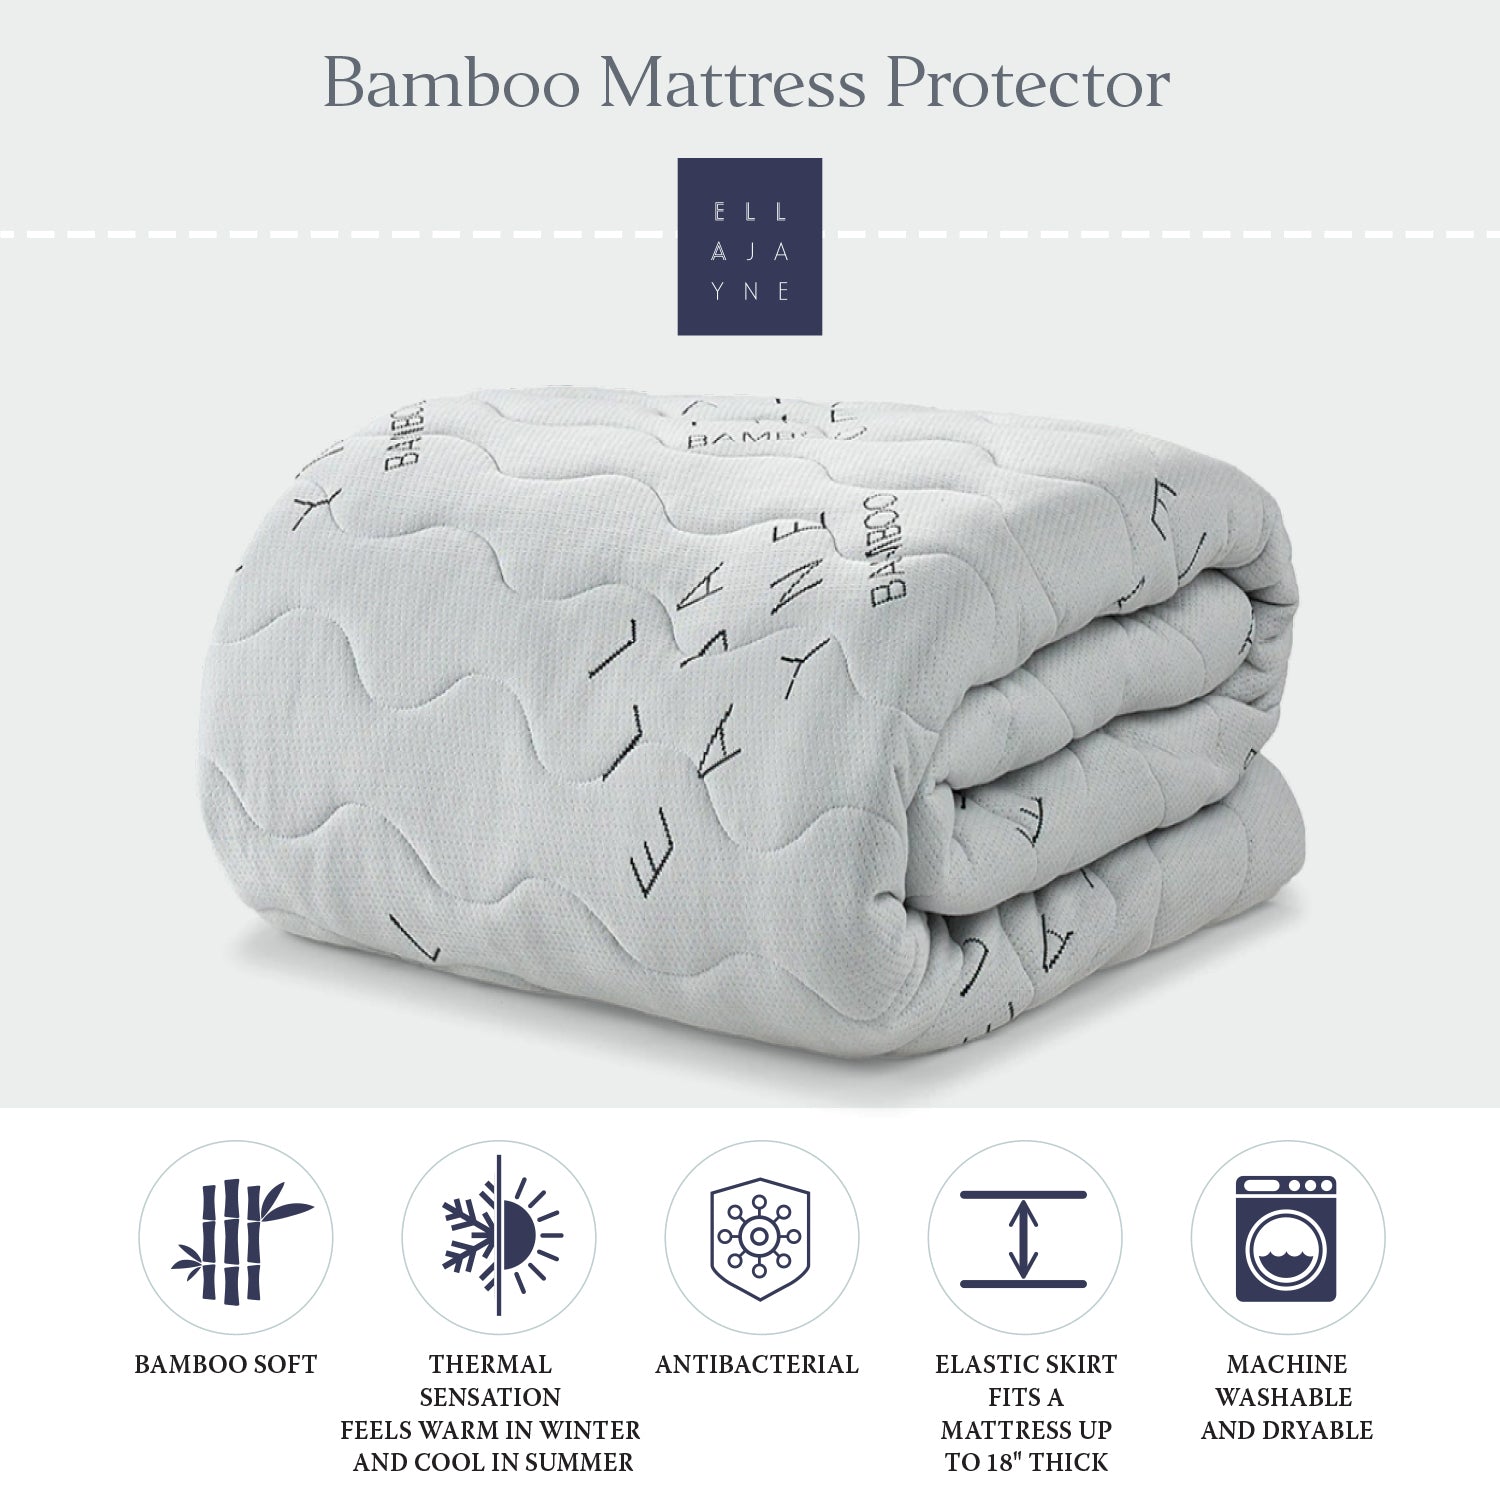 Bamboo Mattress Protector Bundle | Bamboo Mattress Protector & Shredded Memory Foam Pillow, 2pc